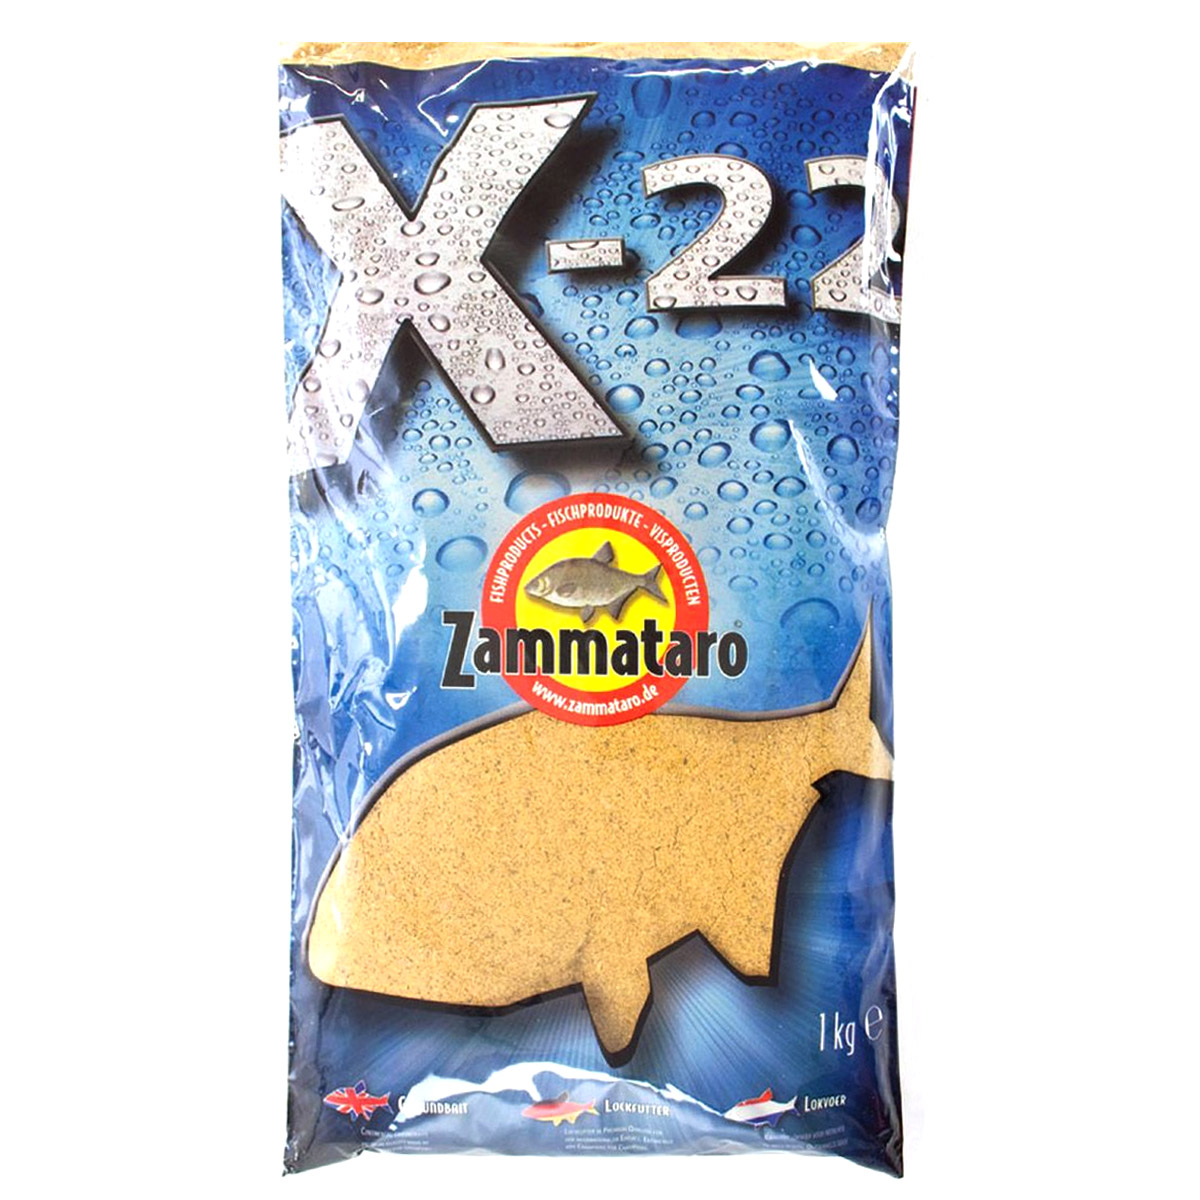 Zammataro X22 Geel 1 kg